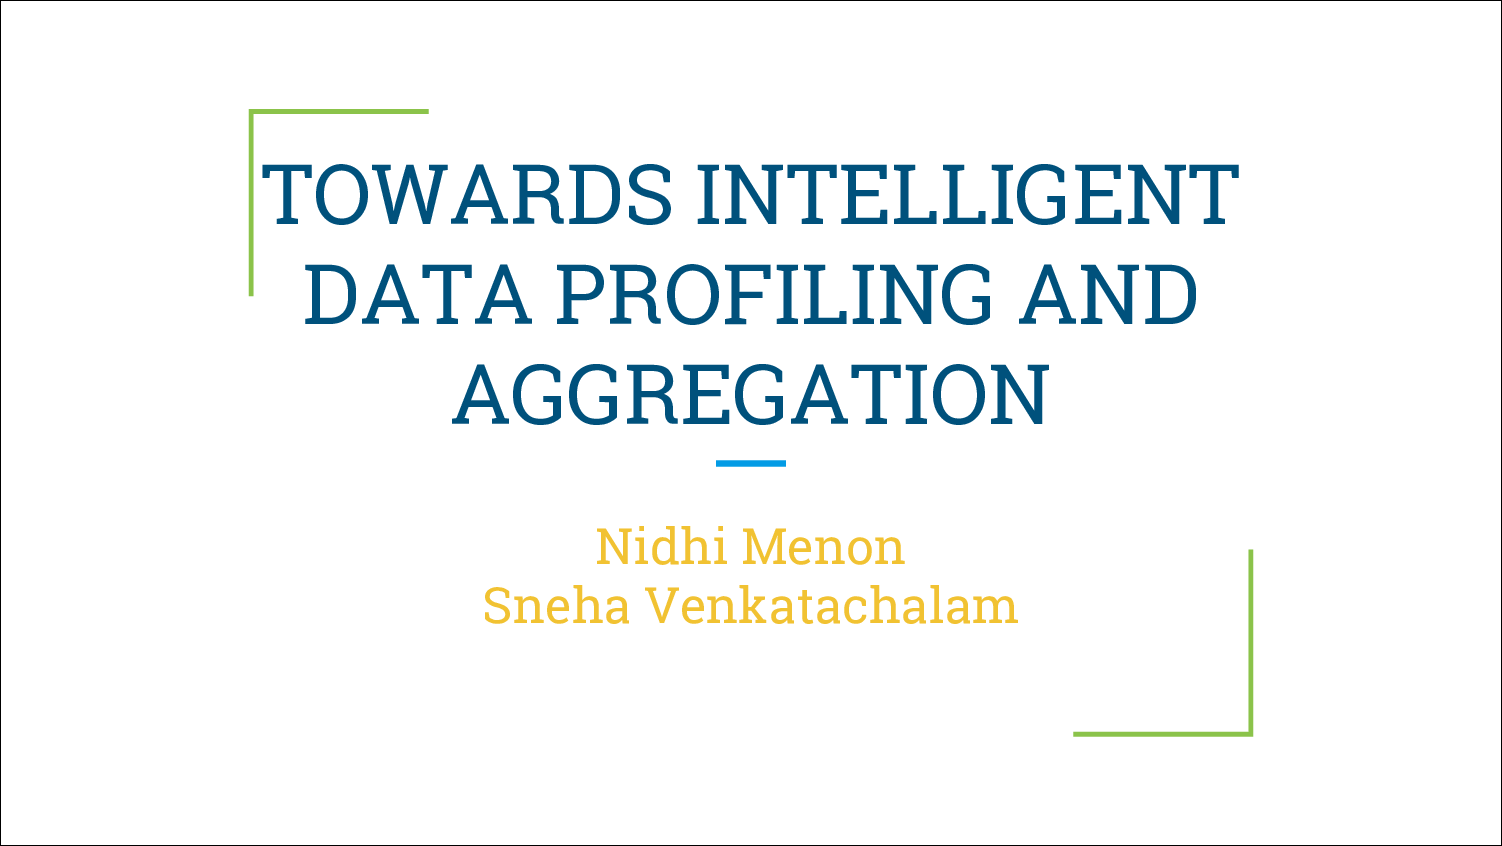 [PRESENTATION] Towards Intelligent Data Profiling and Aggregation